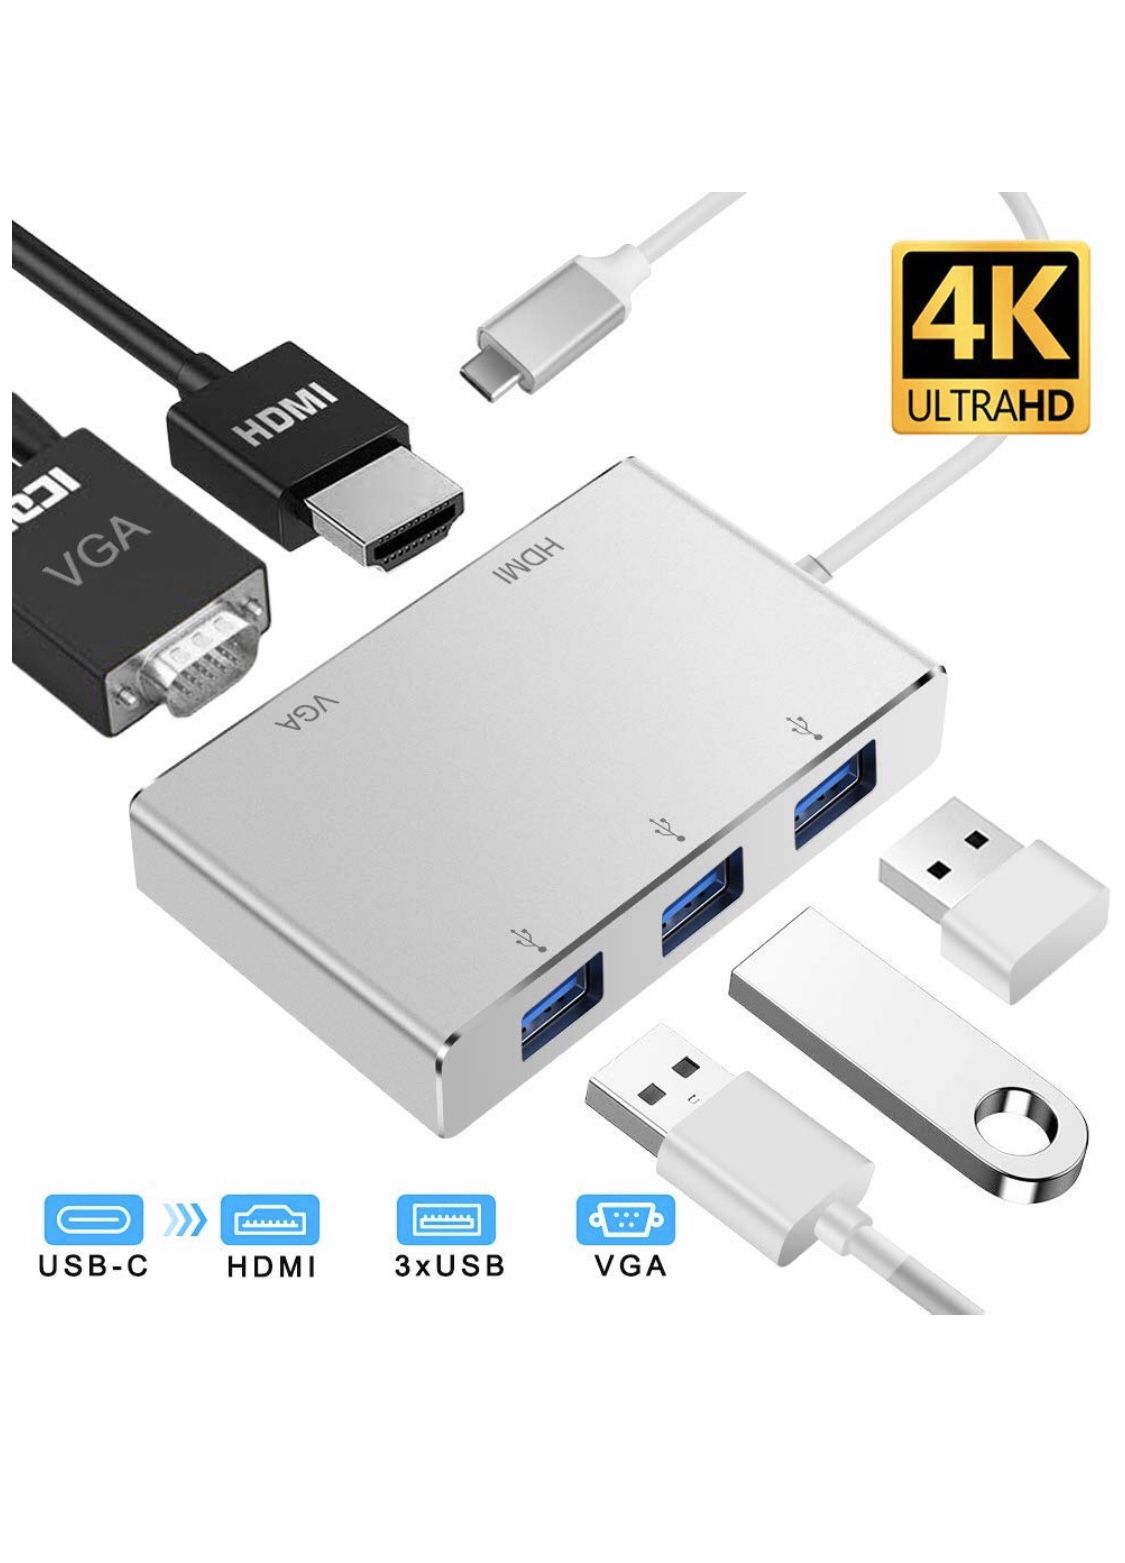 weton USB C to HDMI VGA Adapter, 5 in 1 USB 3.1 Type C Hub to HDMI 4K,1080P VGA,3xUSB 3.0 Multiport AV Converter Compatible with MacBook/MacBook Pro/